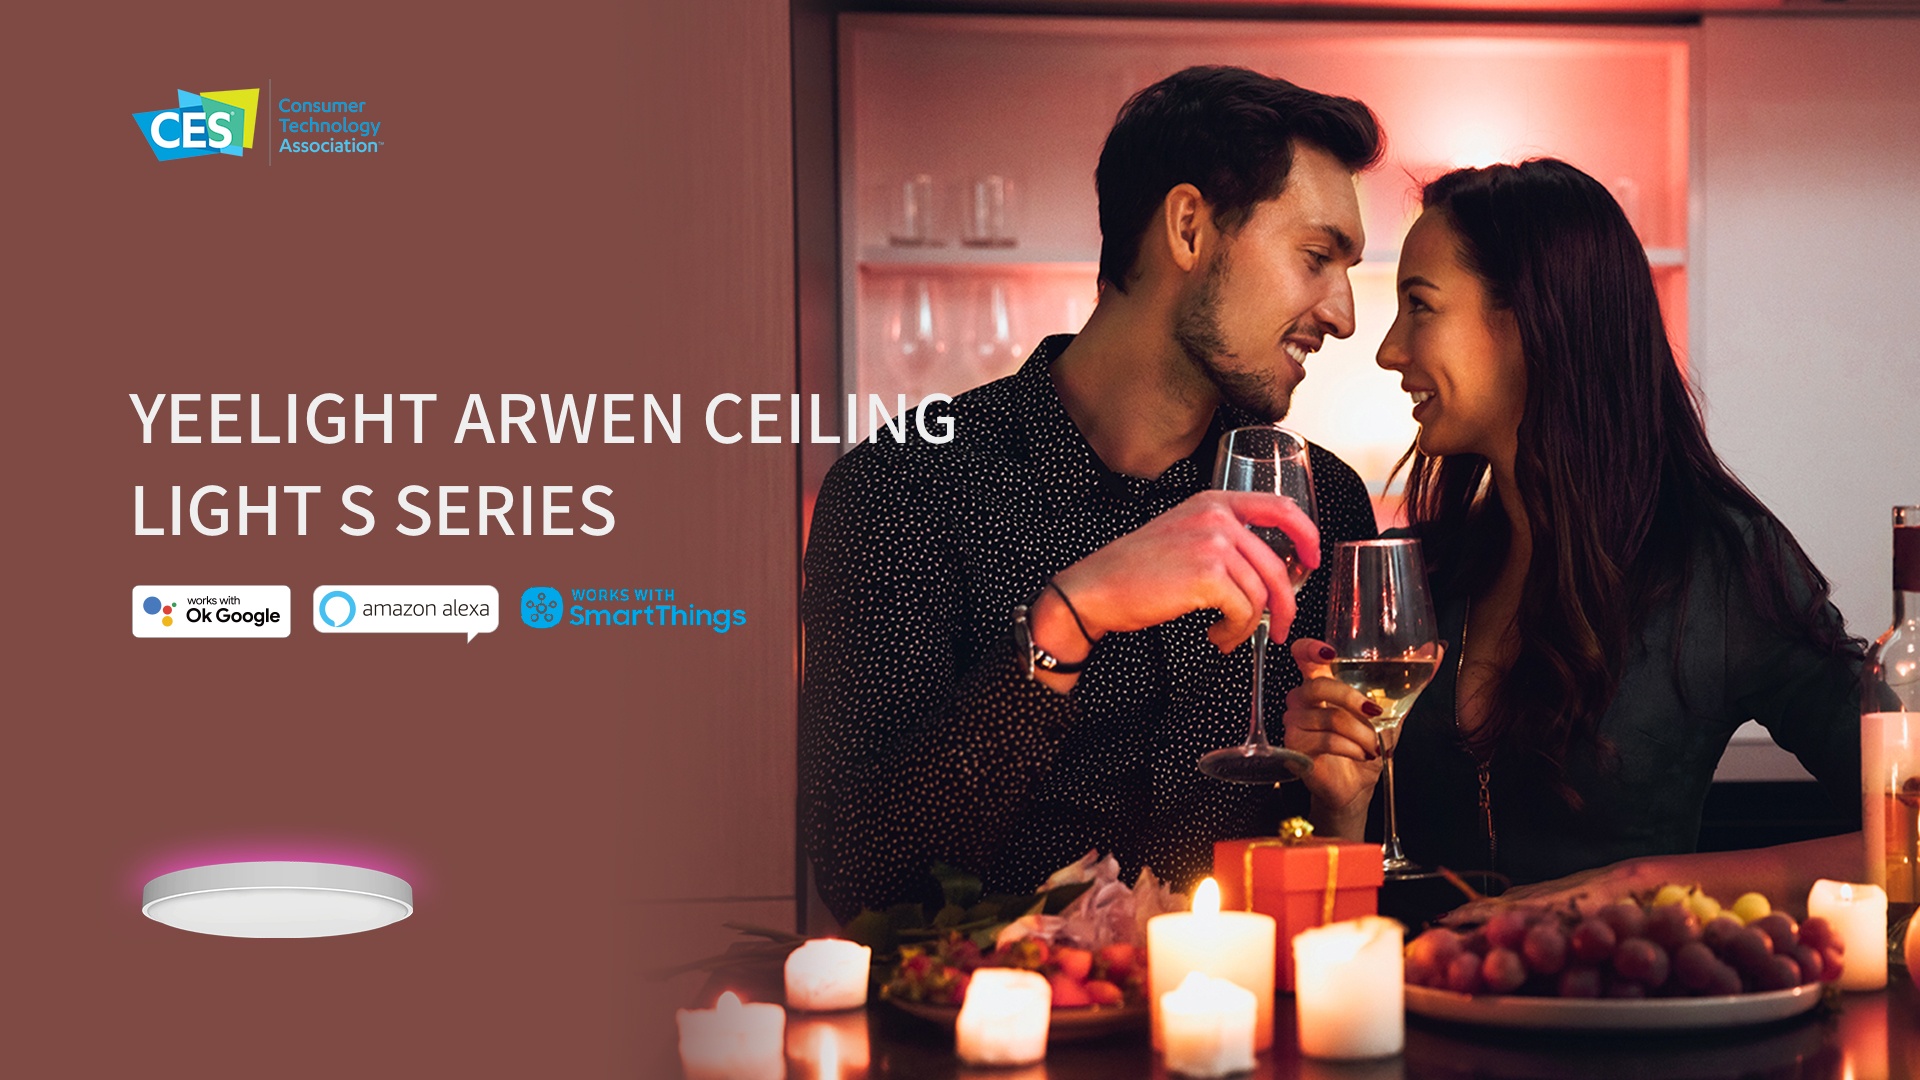 Yeelight Arwen Ceiling Light S Series